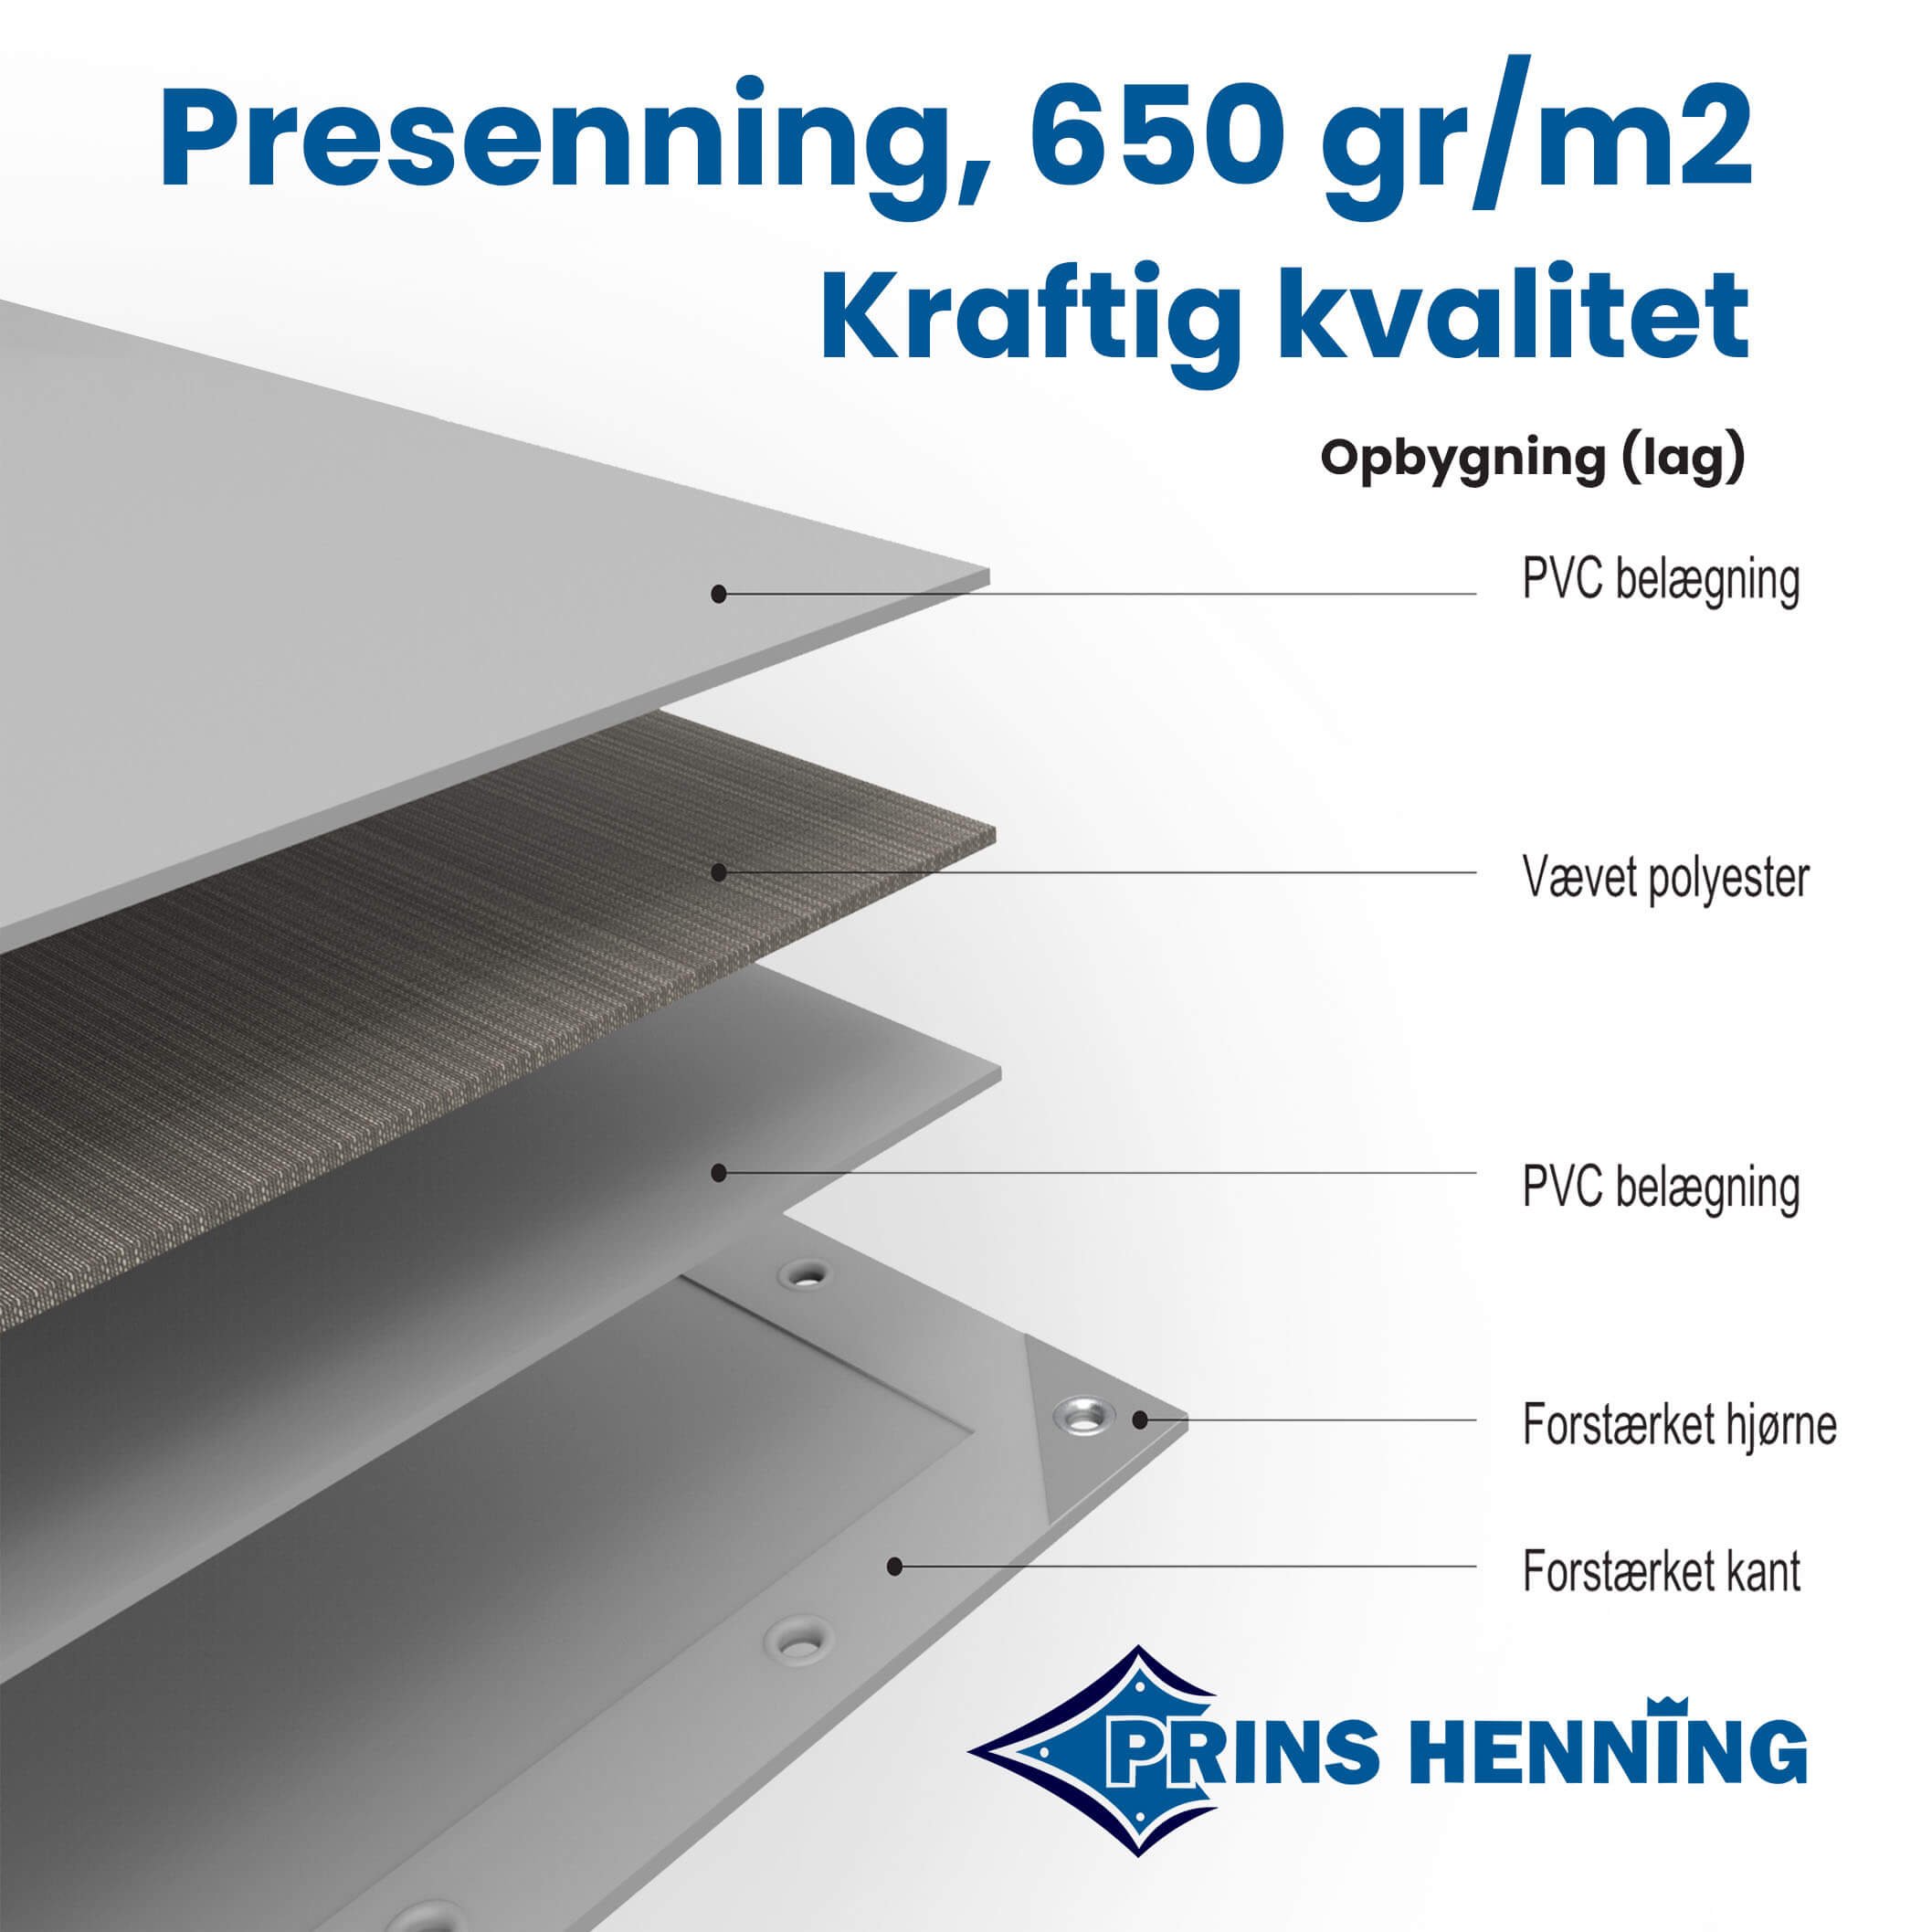 Professionel presenning, 3x3 hvid, kraftig kvalitet, 650 gr/m2 Hvide presenninger - Prins Henning v/DKTEX